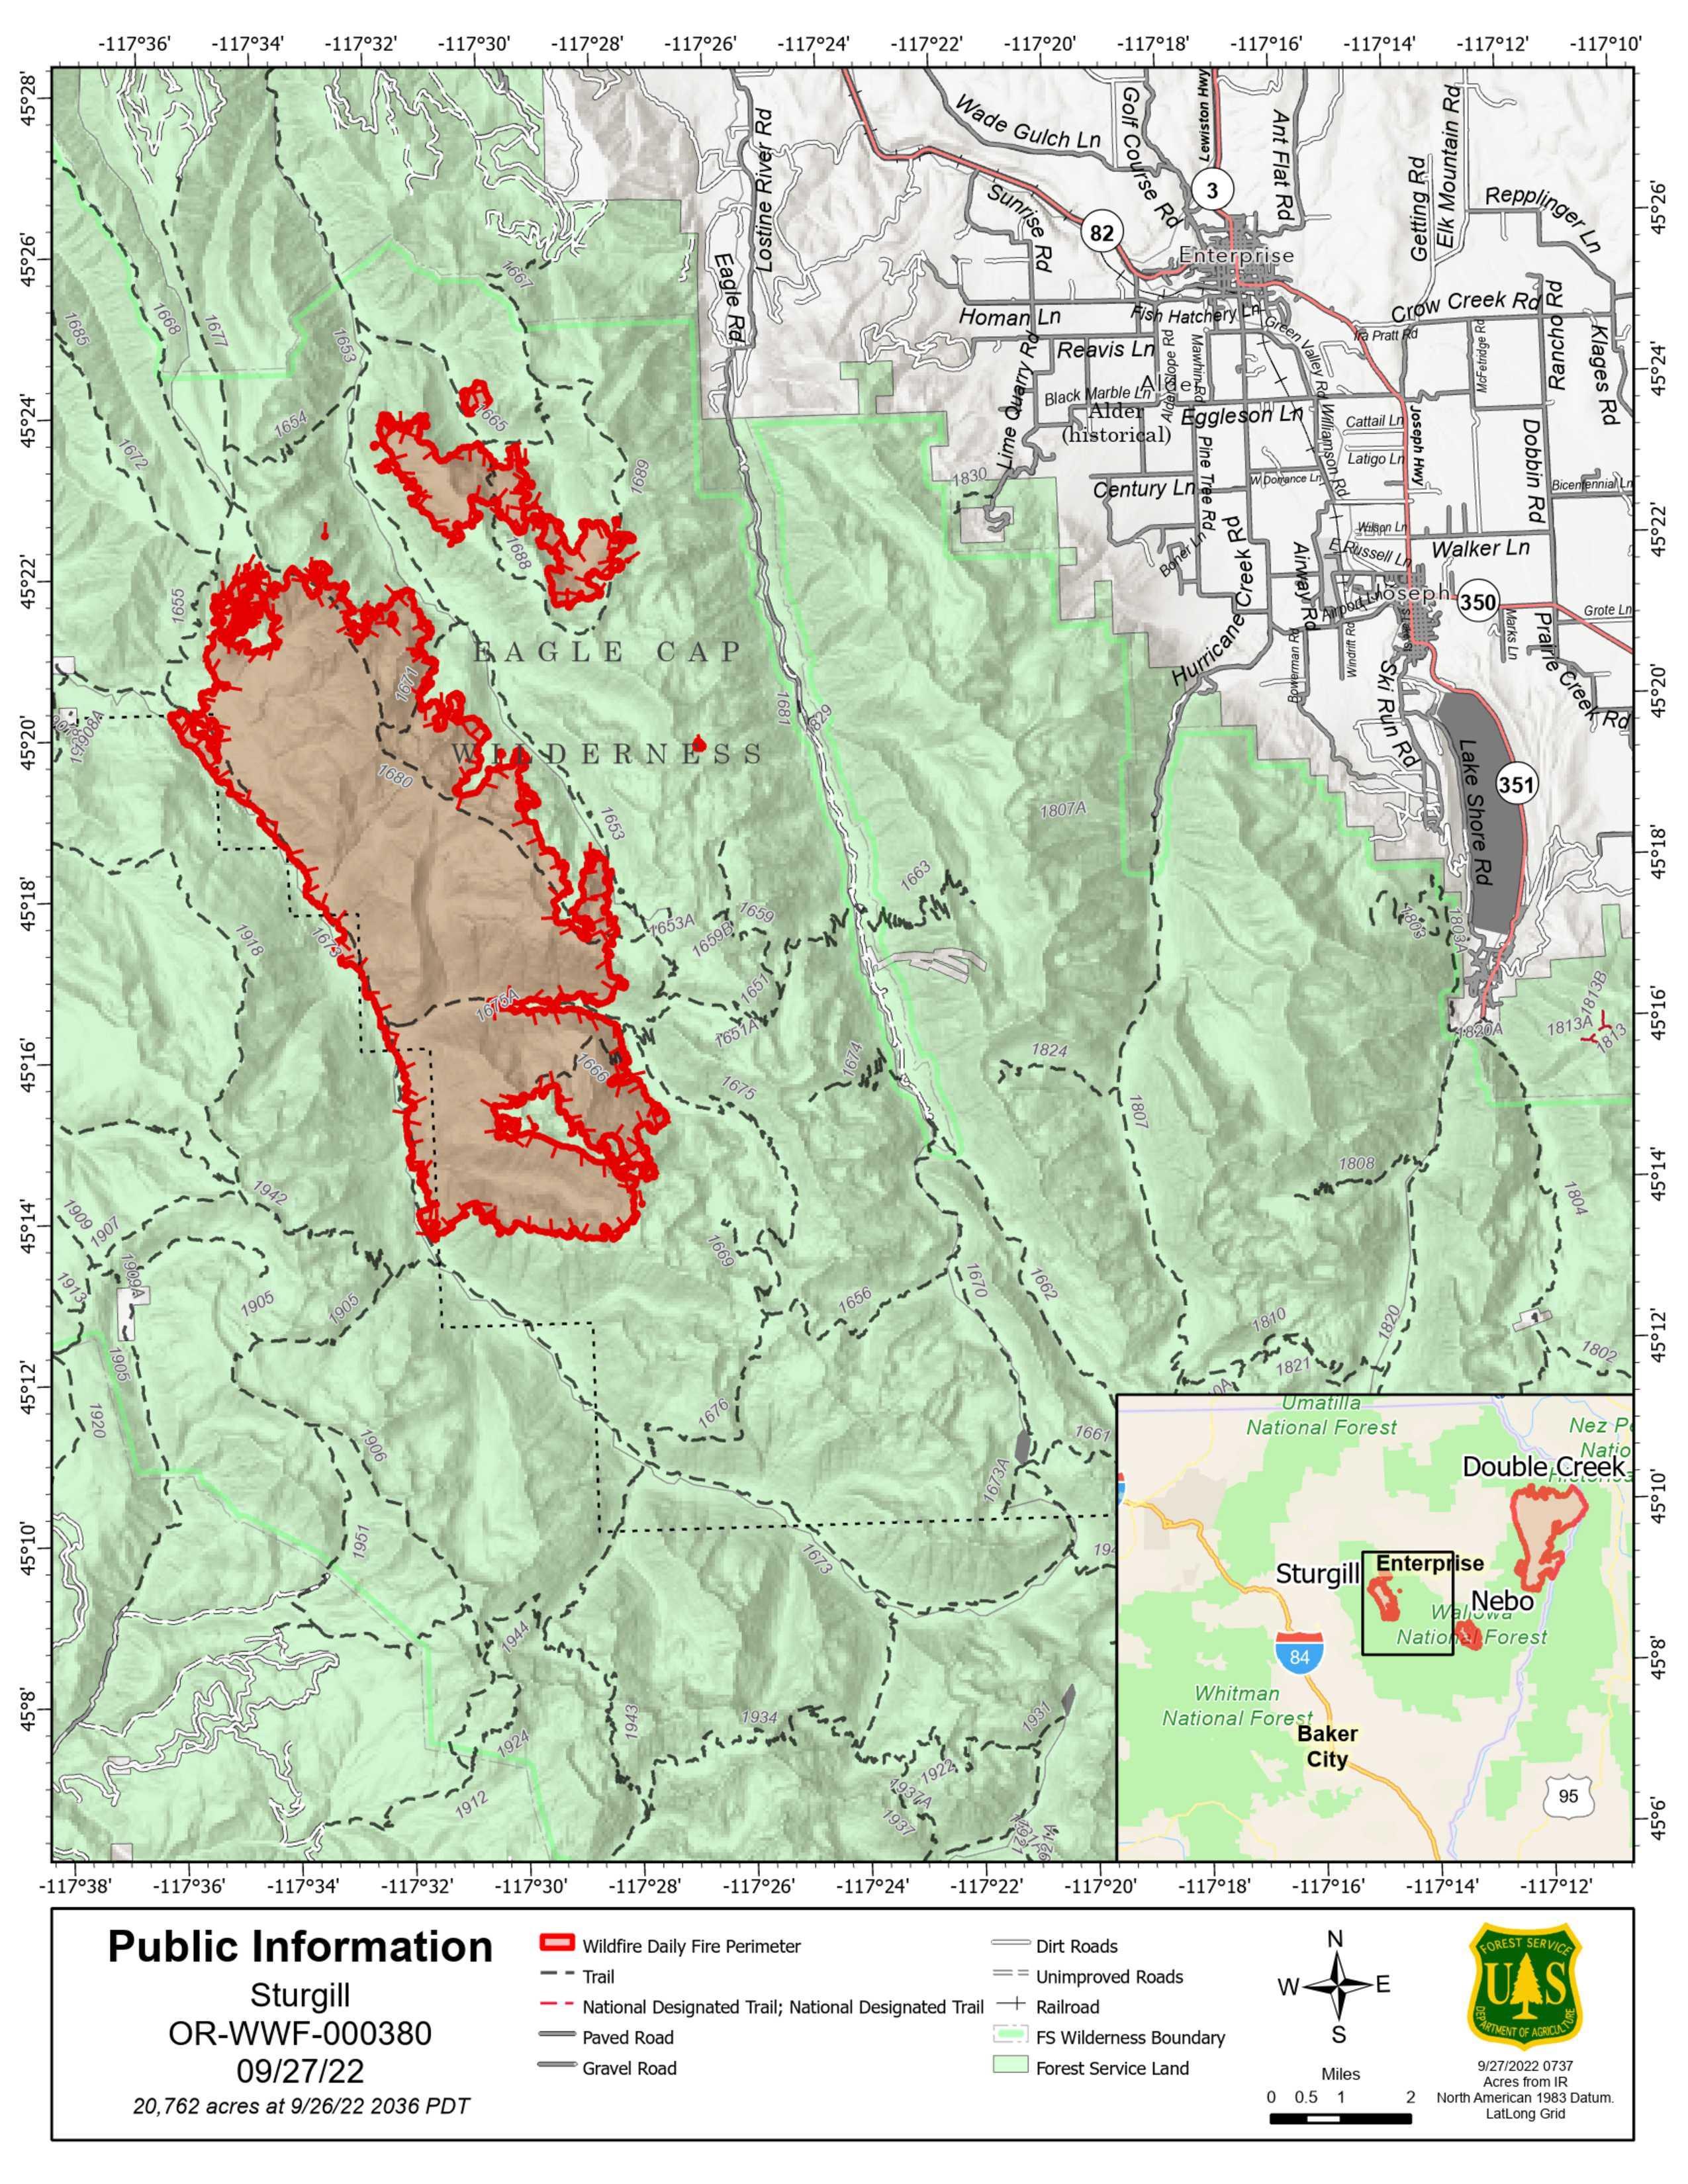 Sturgill Fire Map - 09/27/2022